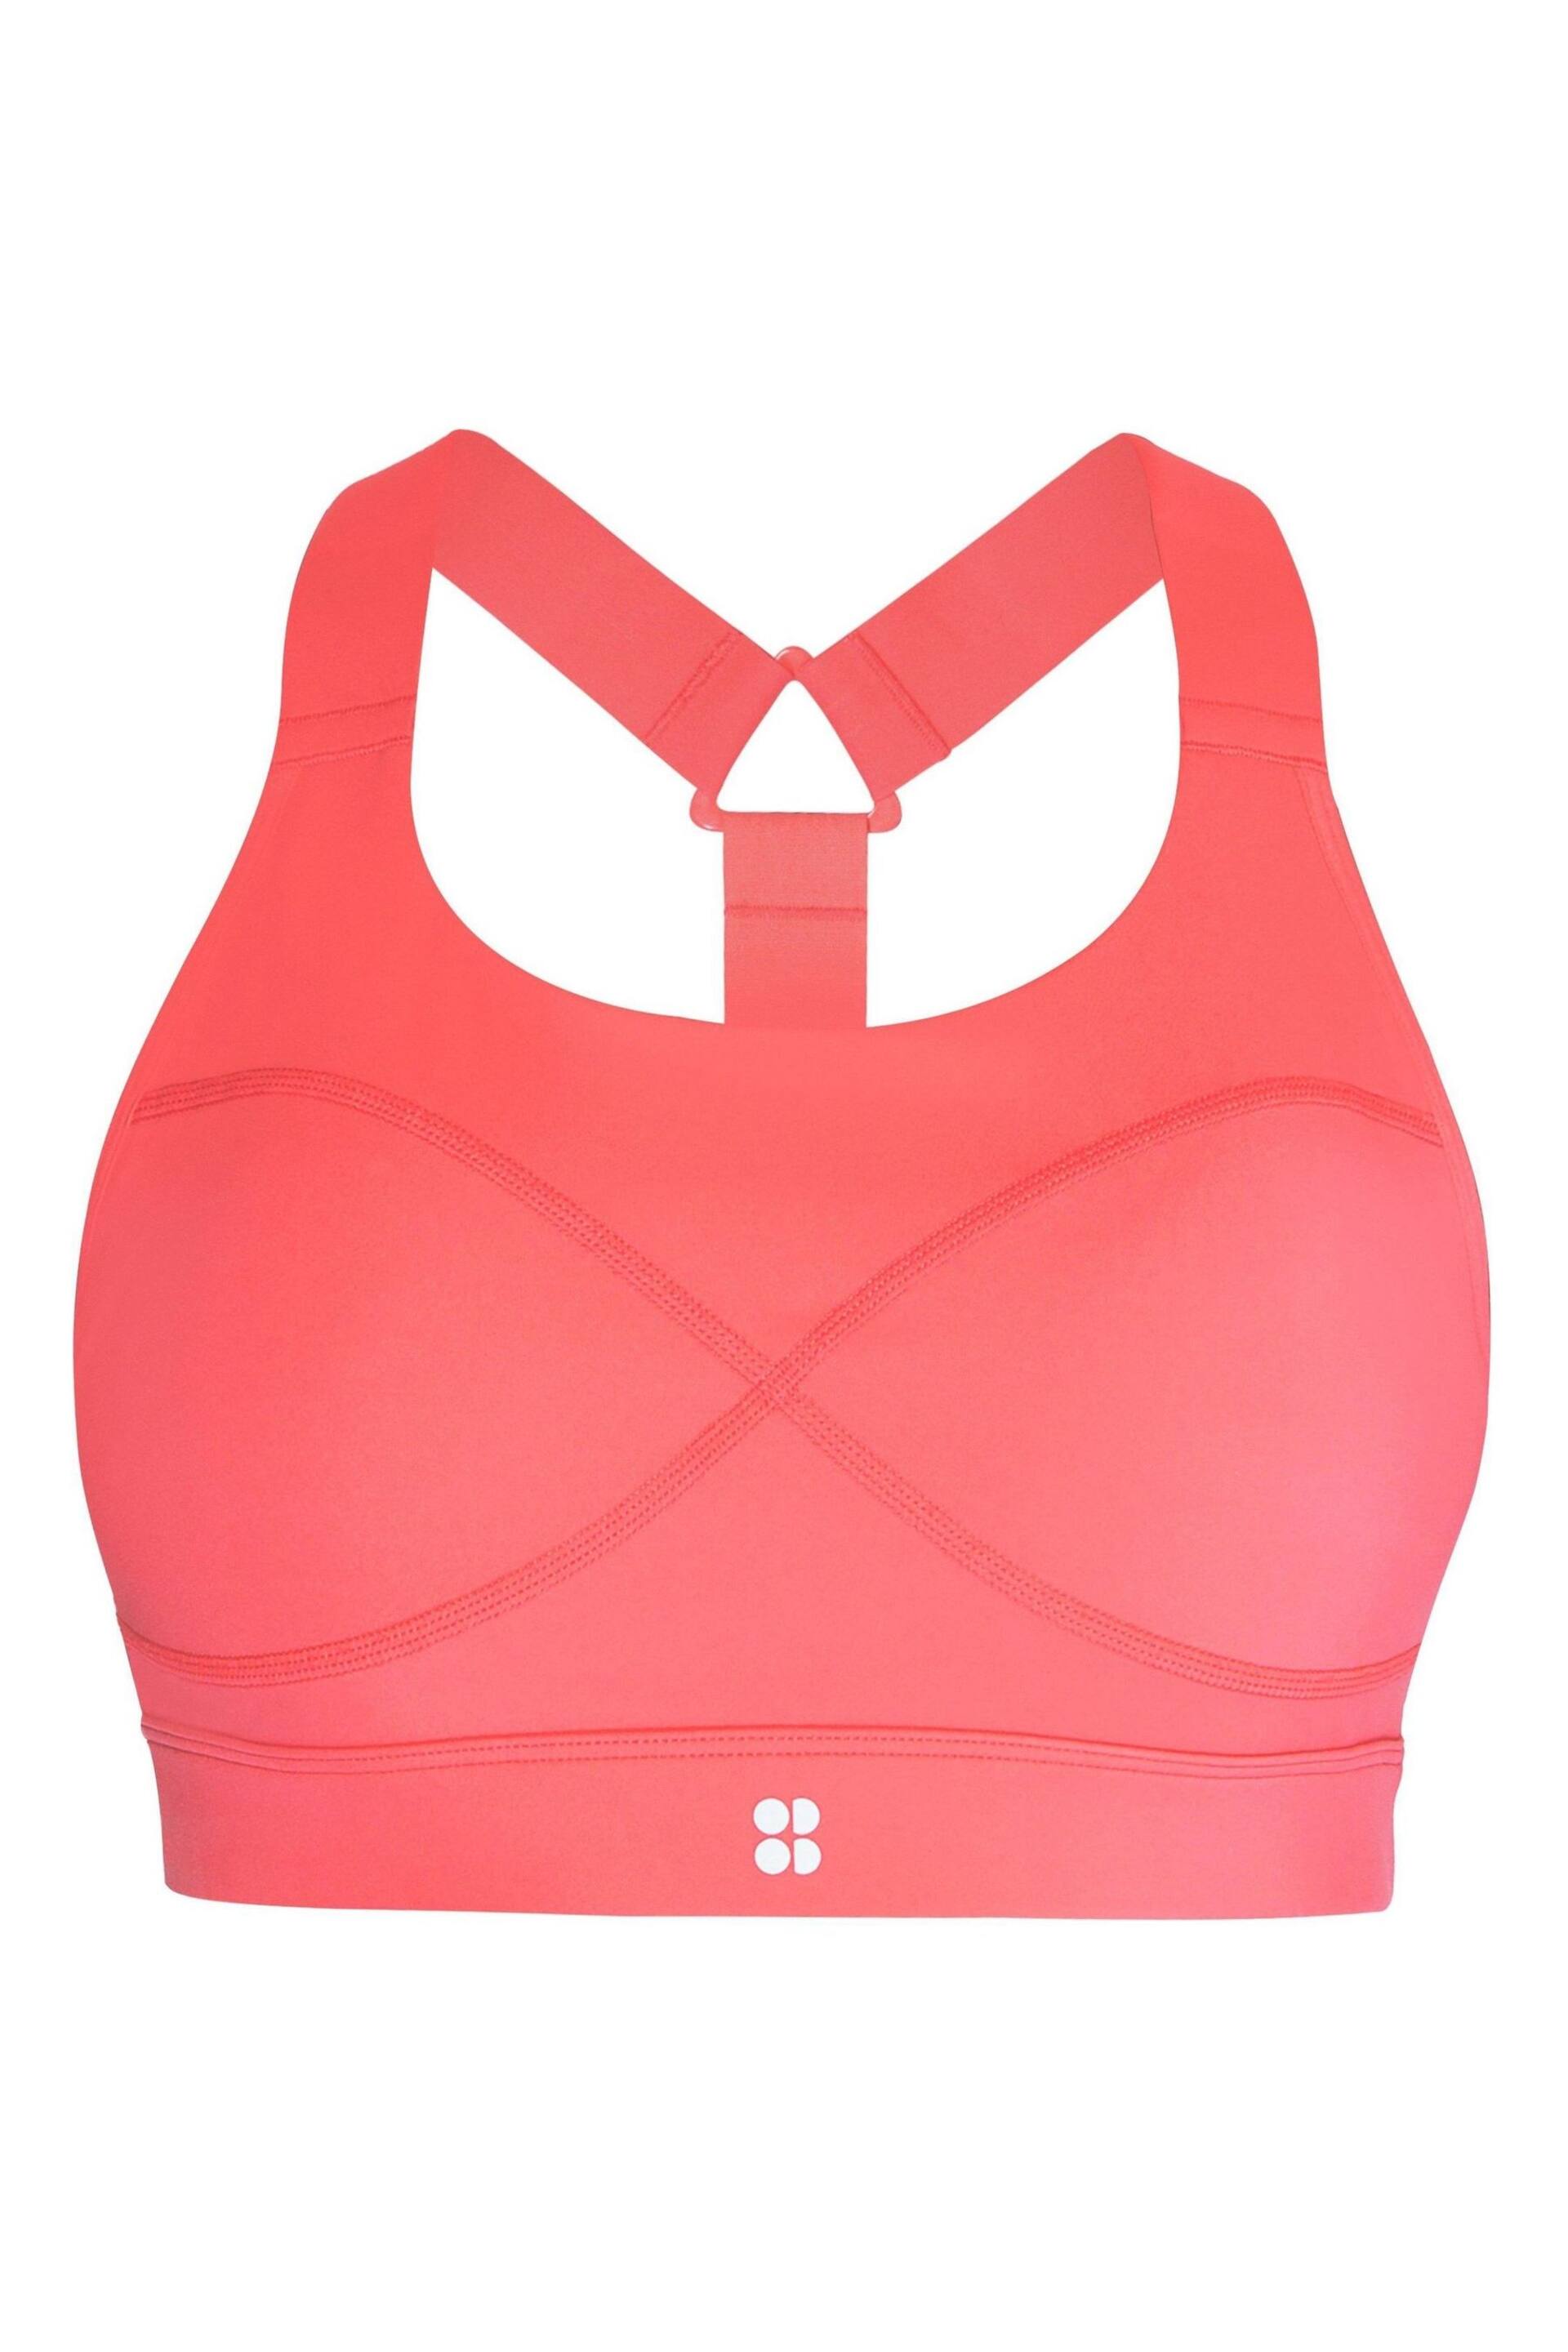 Sweaty Betty Coral Pink Medium Power Support Sports Bra - Image 6 of 6